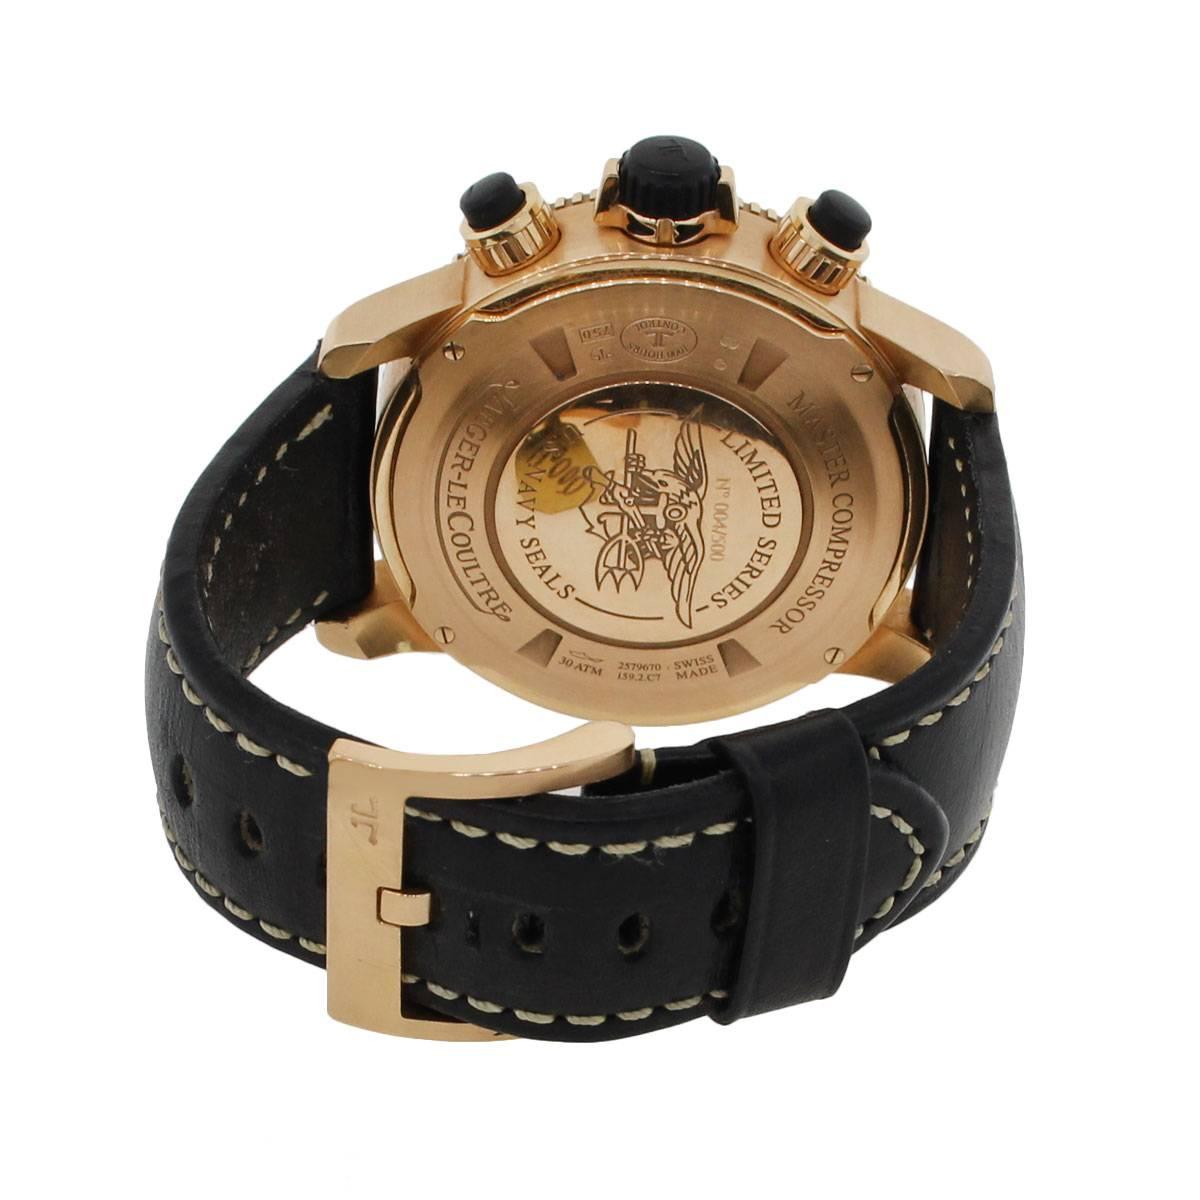 Men's Jaeger Lecoultre Chronograph GMT Limited Navy Seals Wristwatch